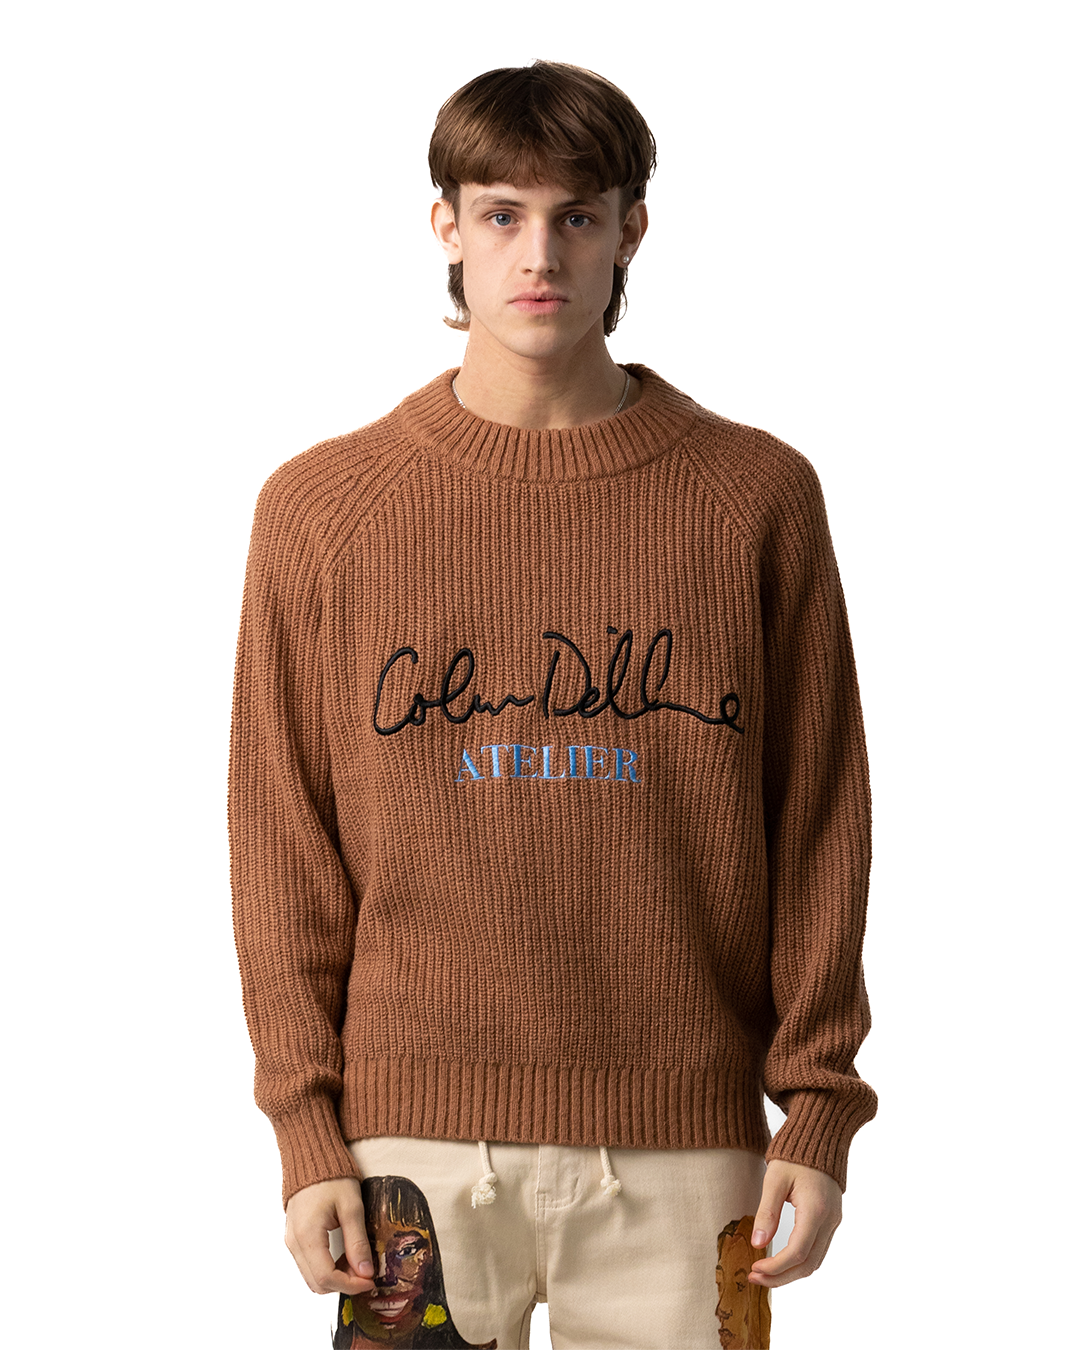 KidSuper Colm Dillane Signature Knit Sweater Tan